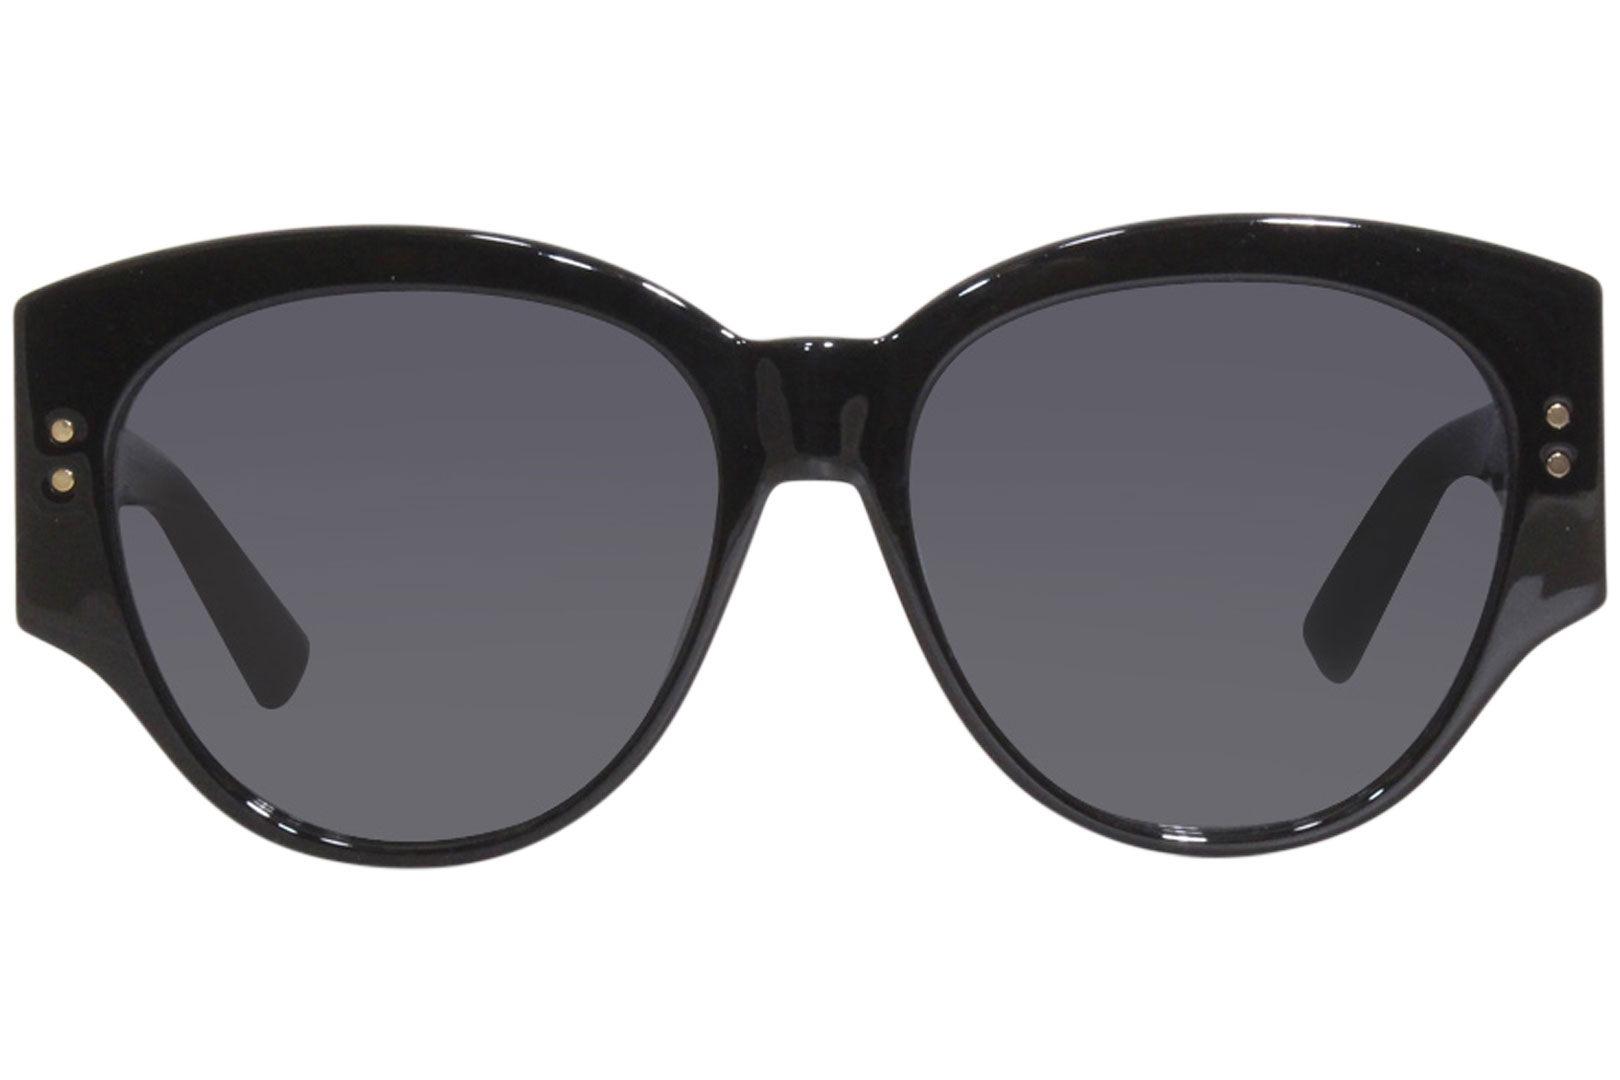 Christian Dior LadyDiorStuds2 Sunglasses Women's Fashion Oval